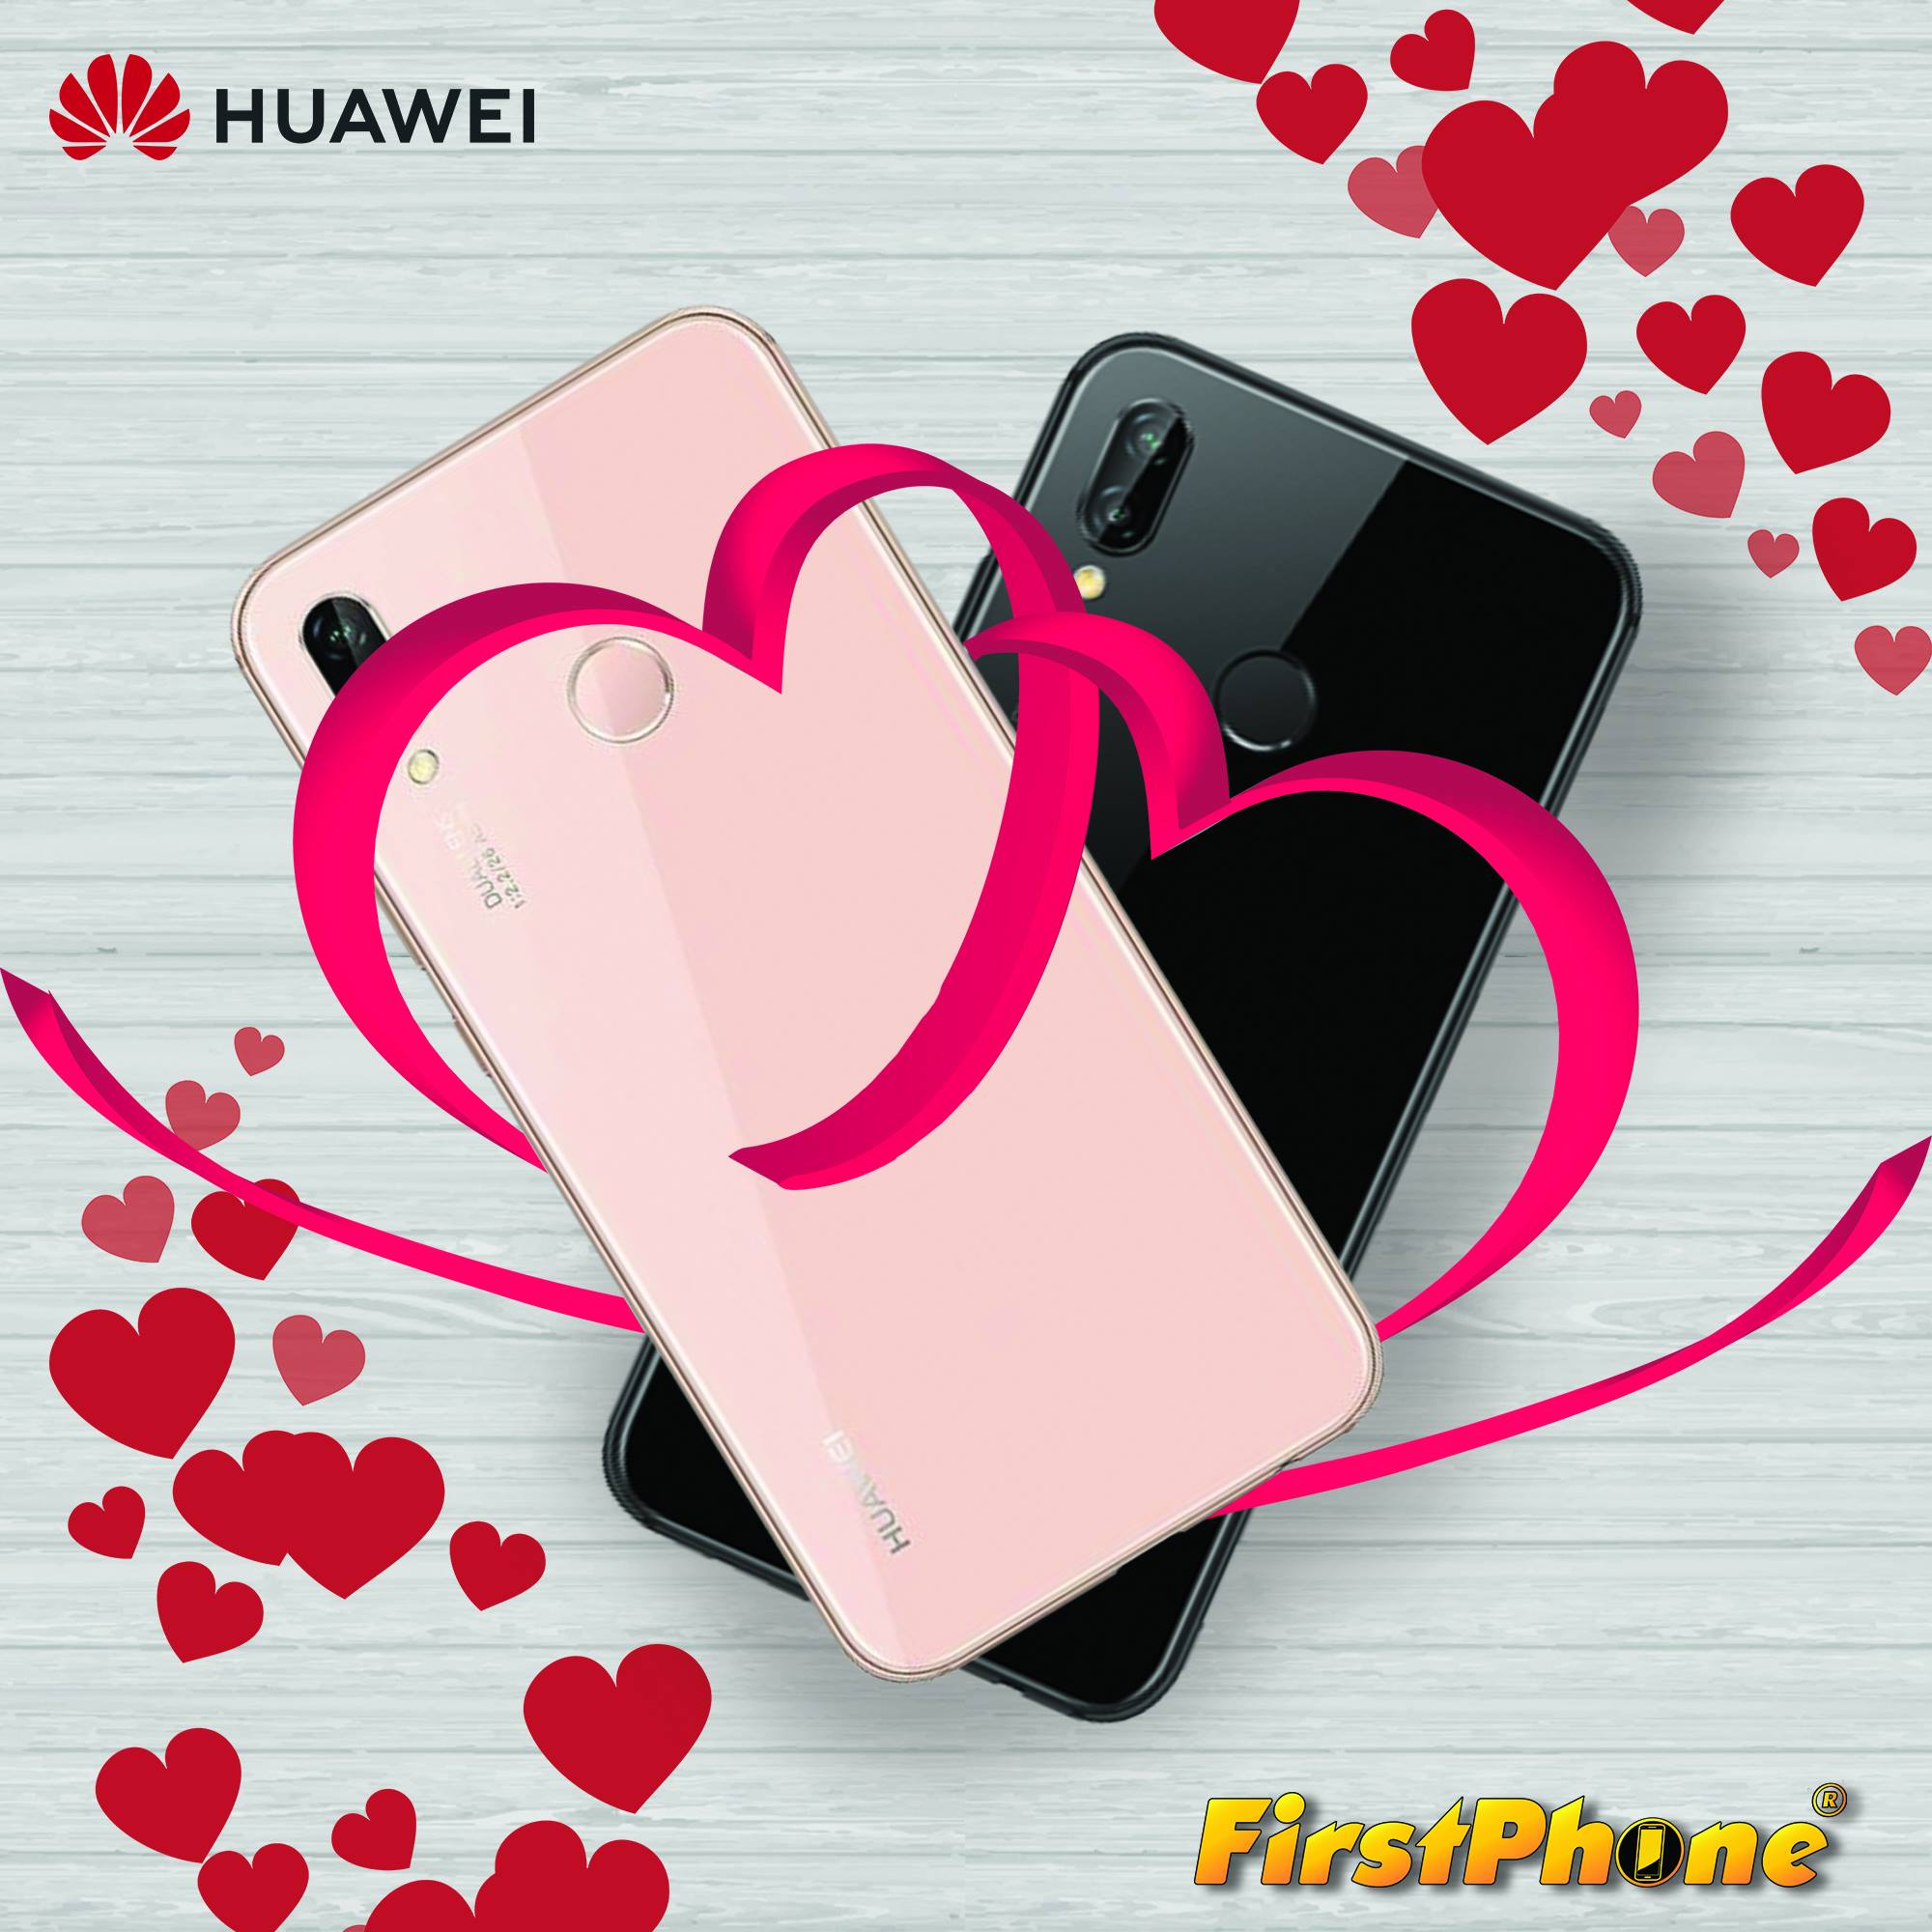 Valentin napi Firstphone Huawei akciók